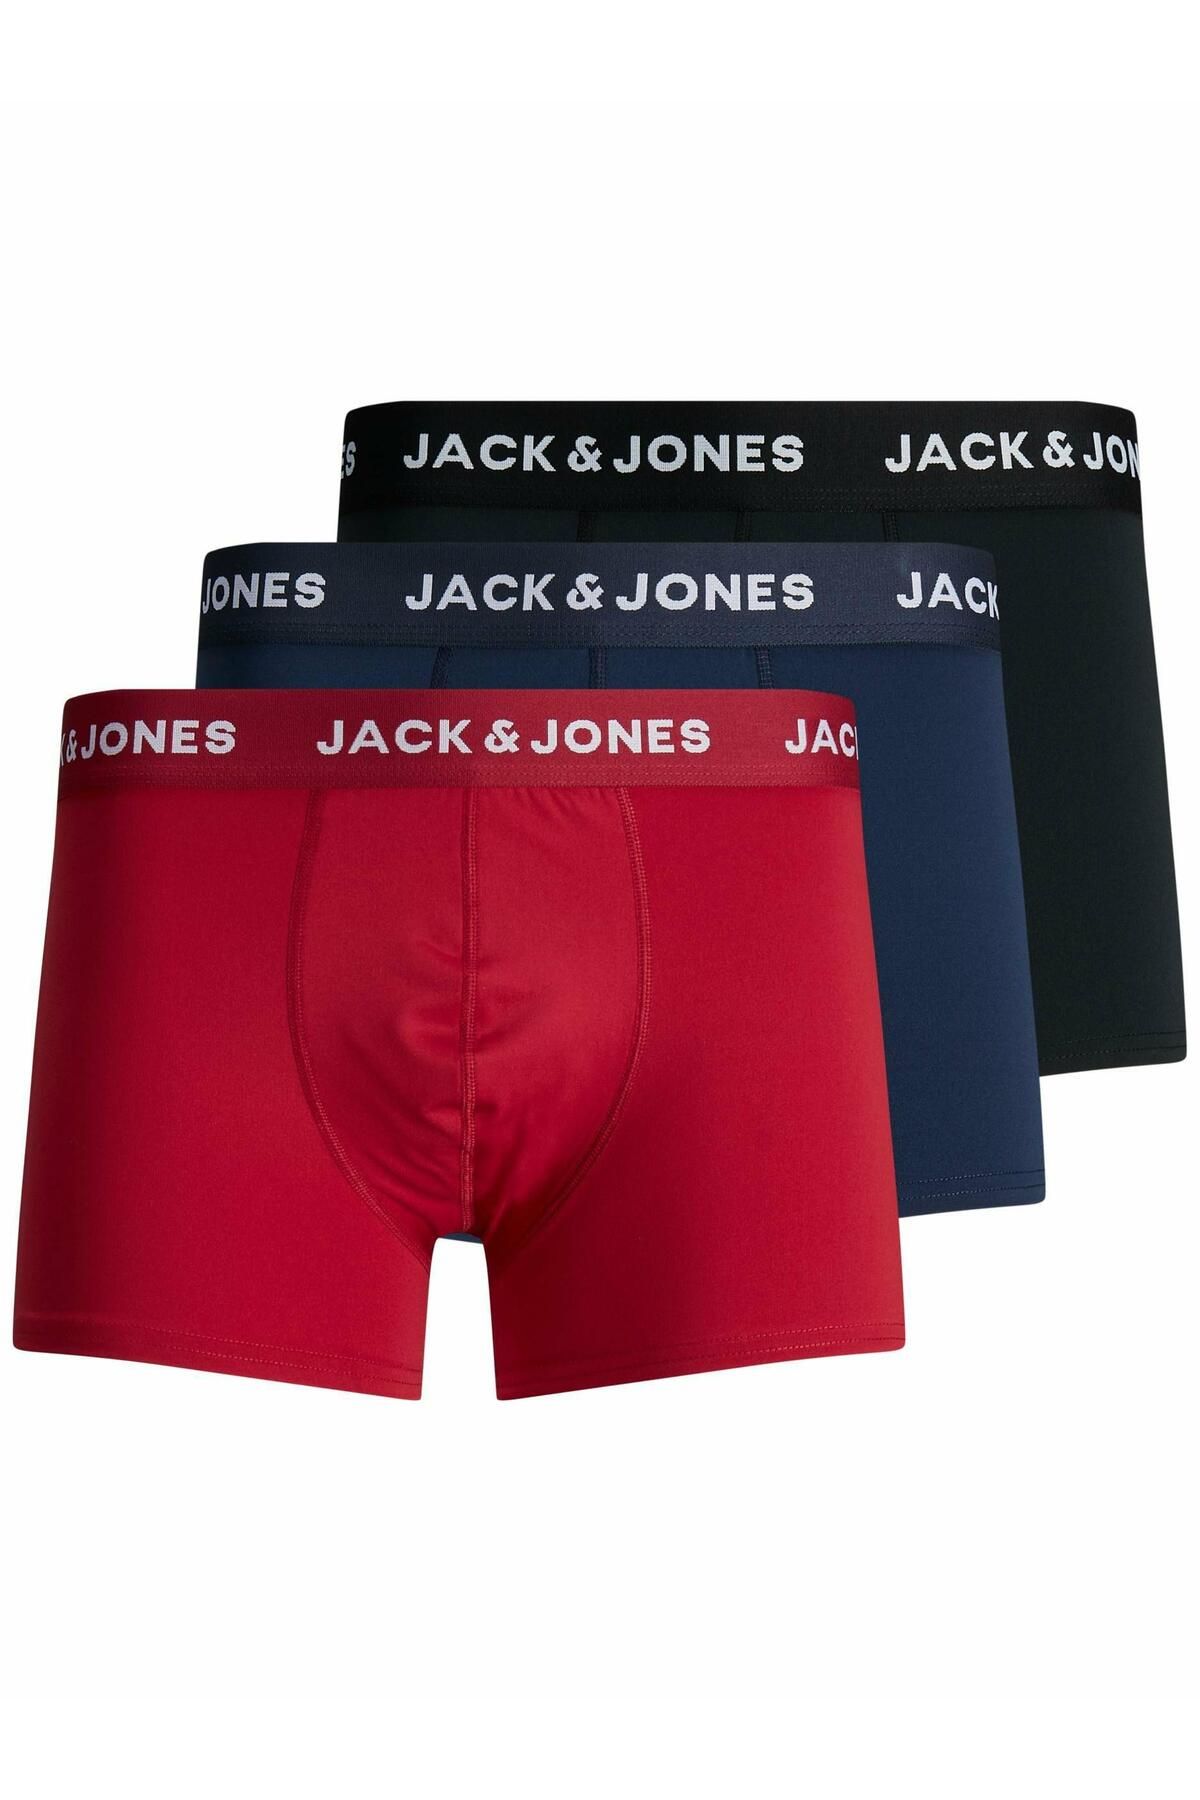 Jack & Jones Jack Jones Mırco Fibre 3 Lü Paket Erkek Boxer 12182075